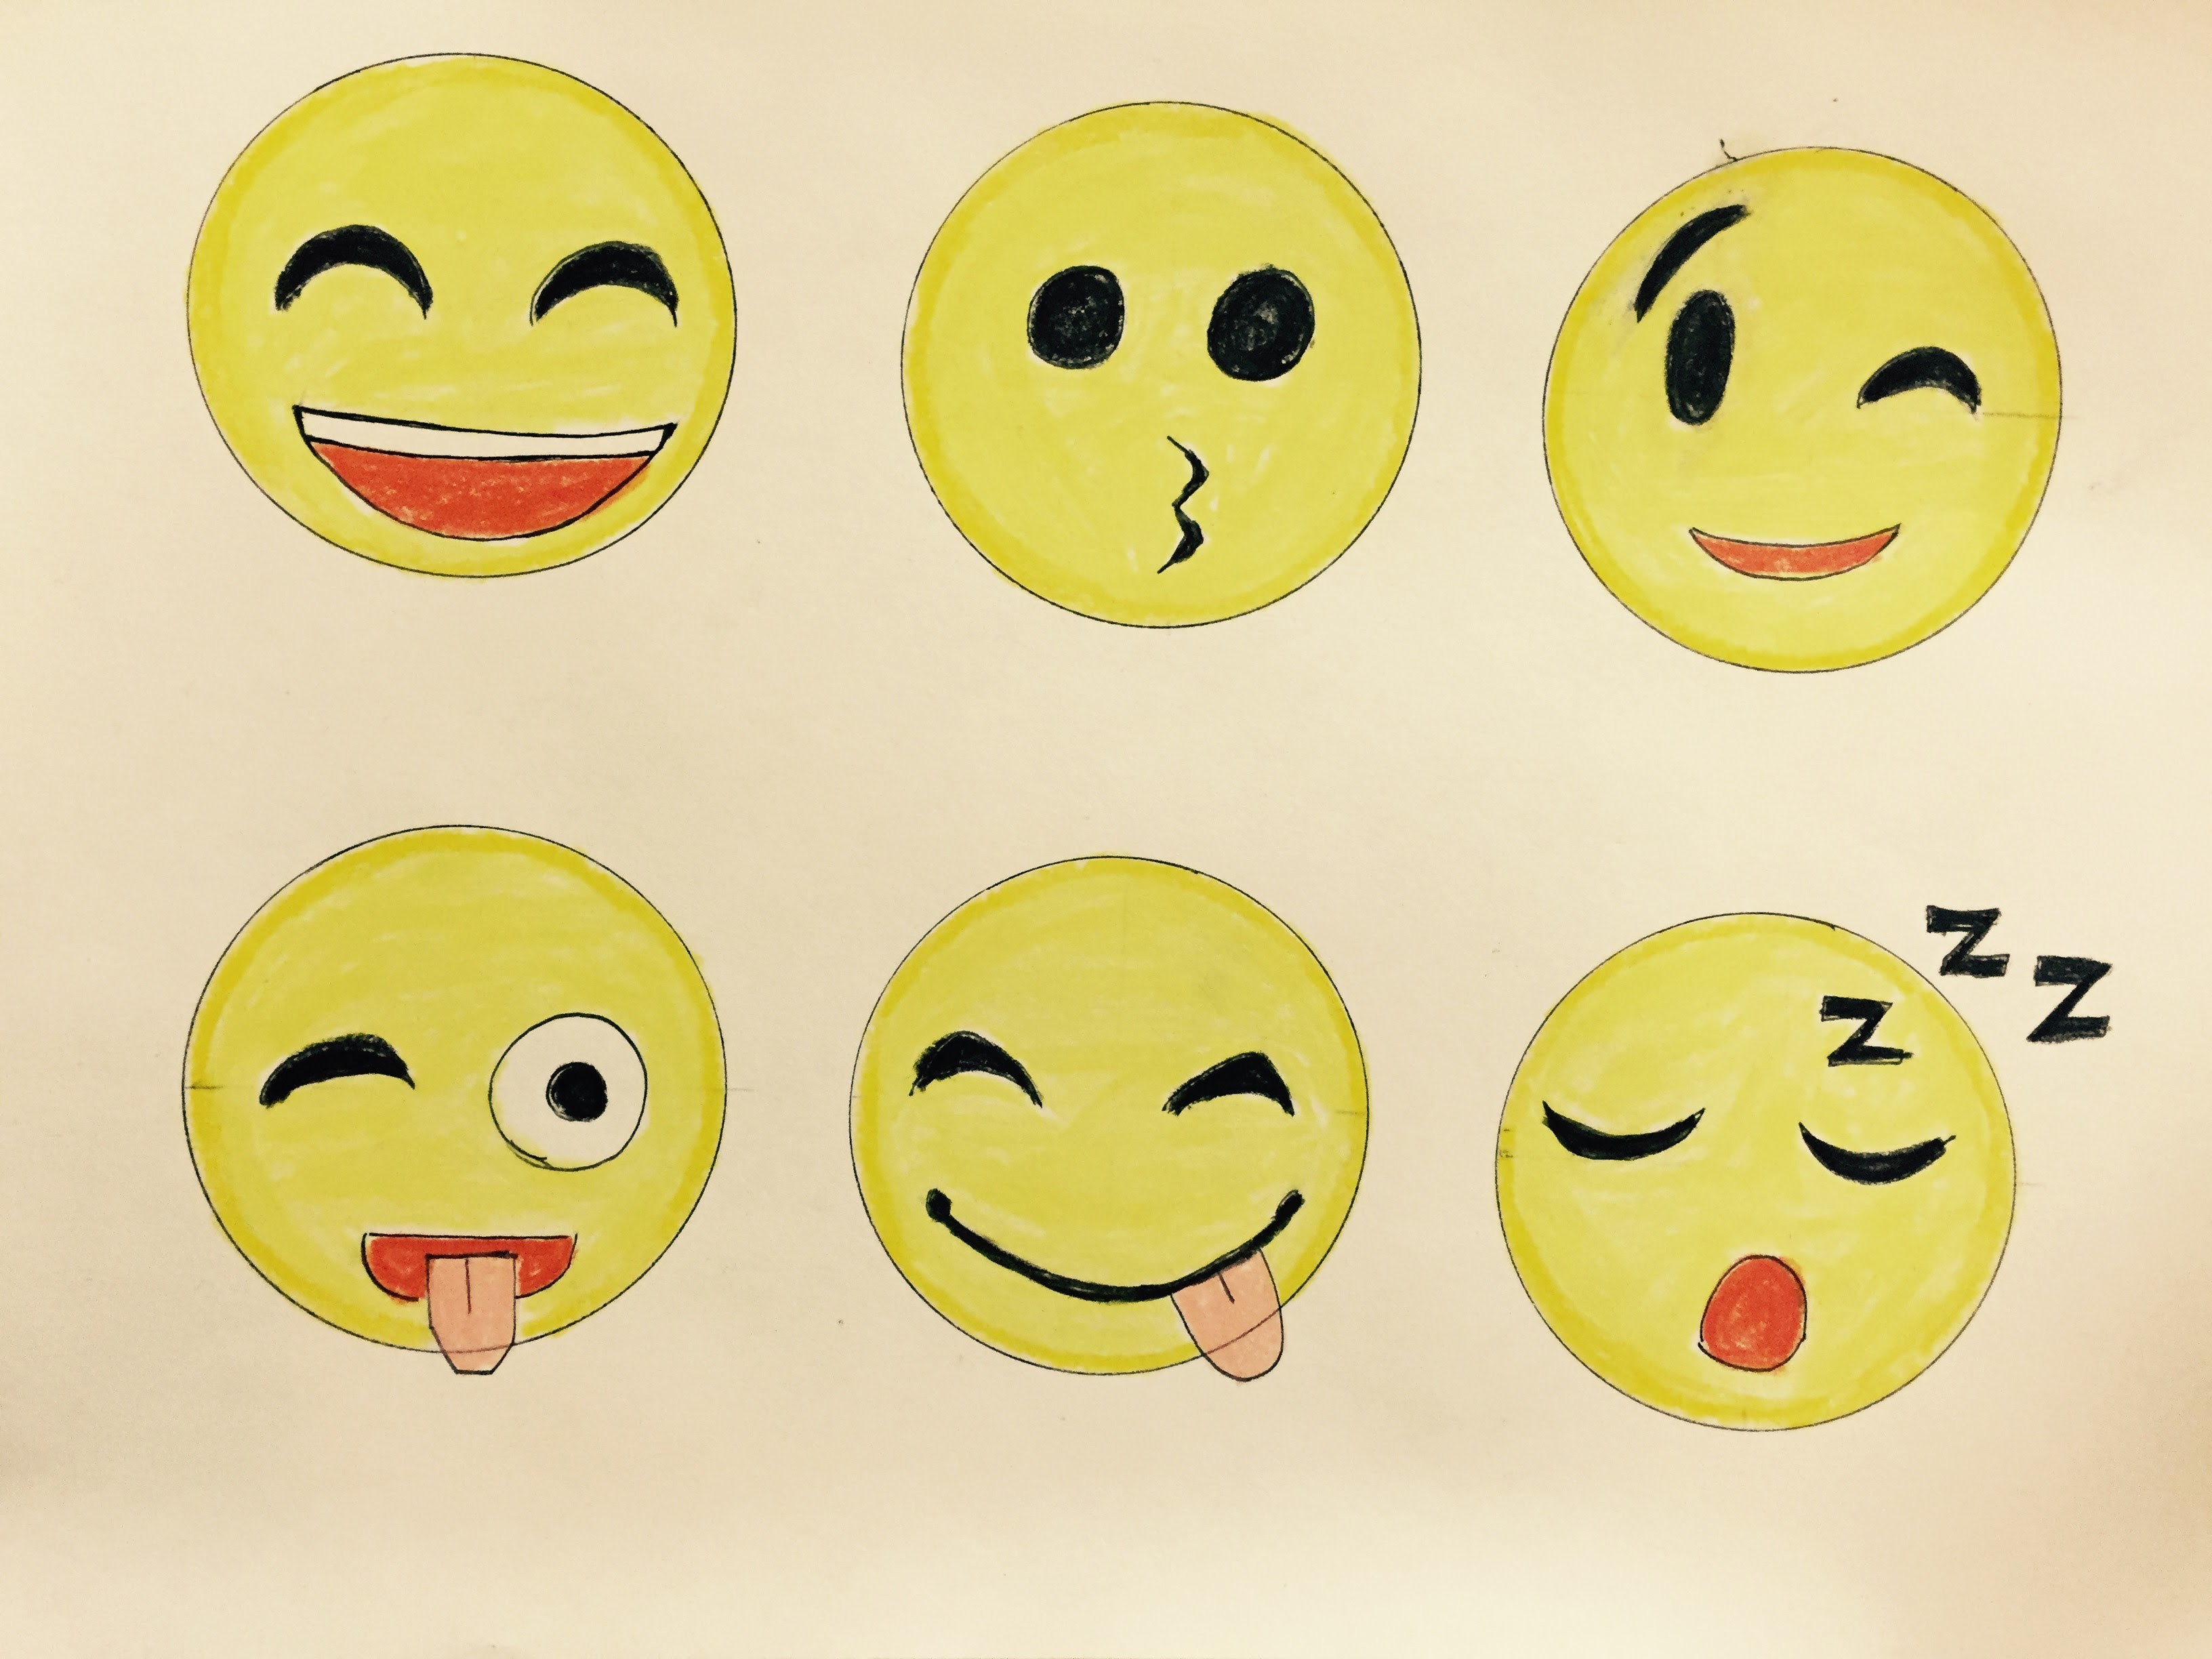 Façon de dessiner des visages emojis